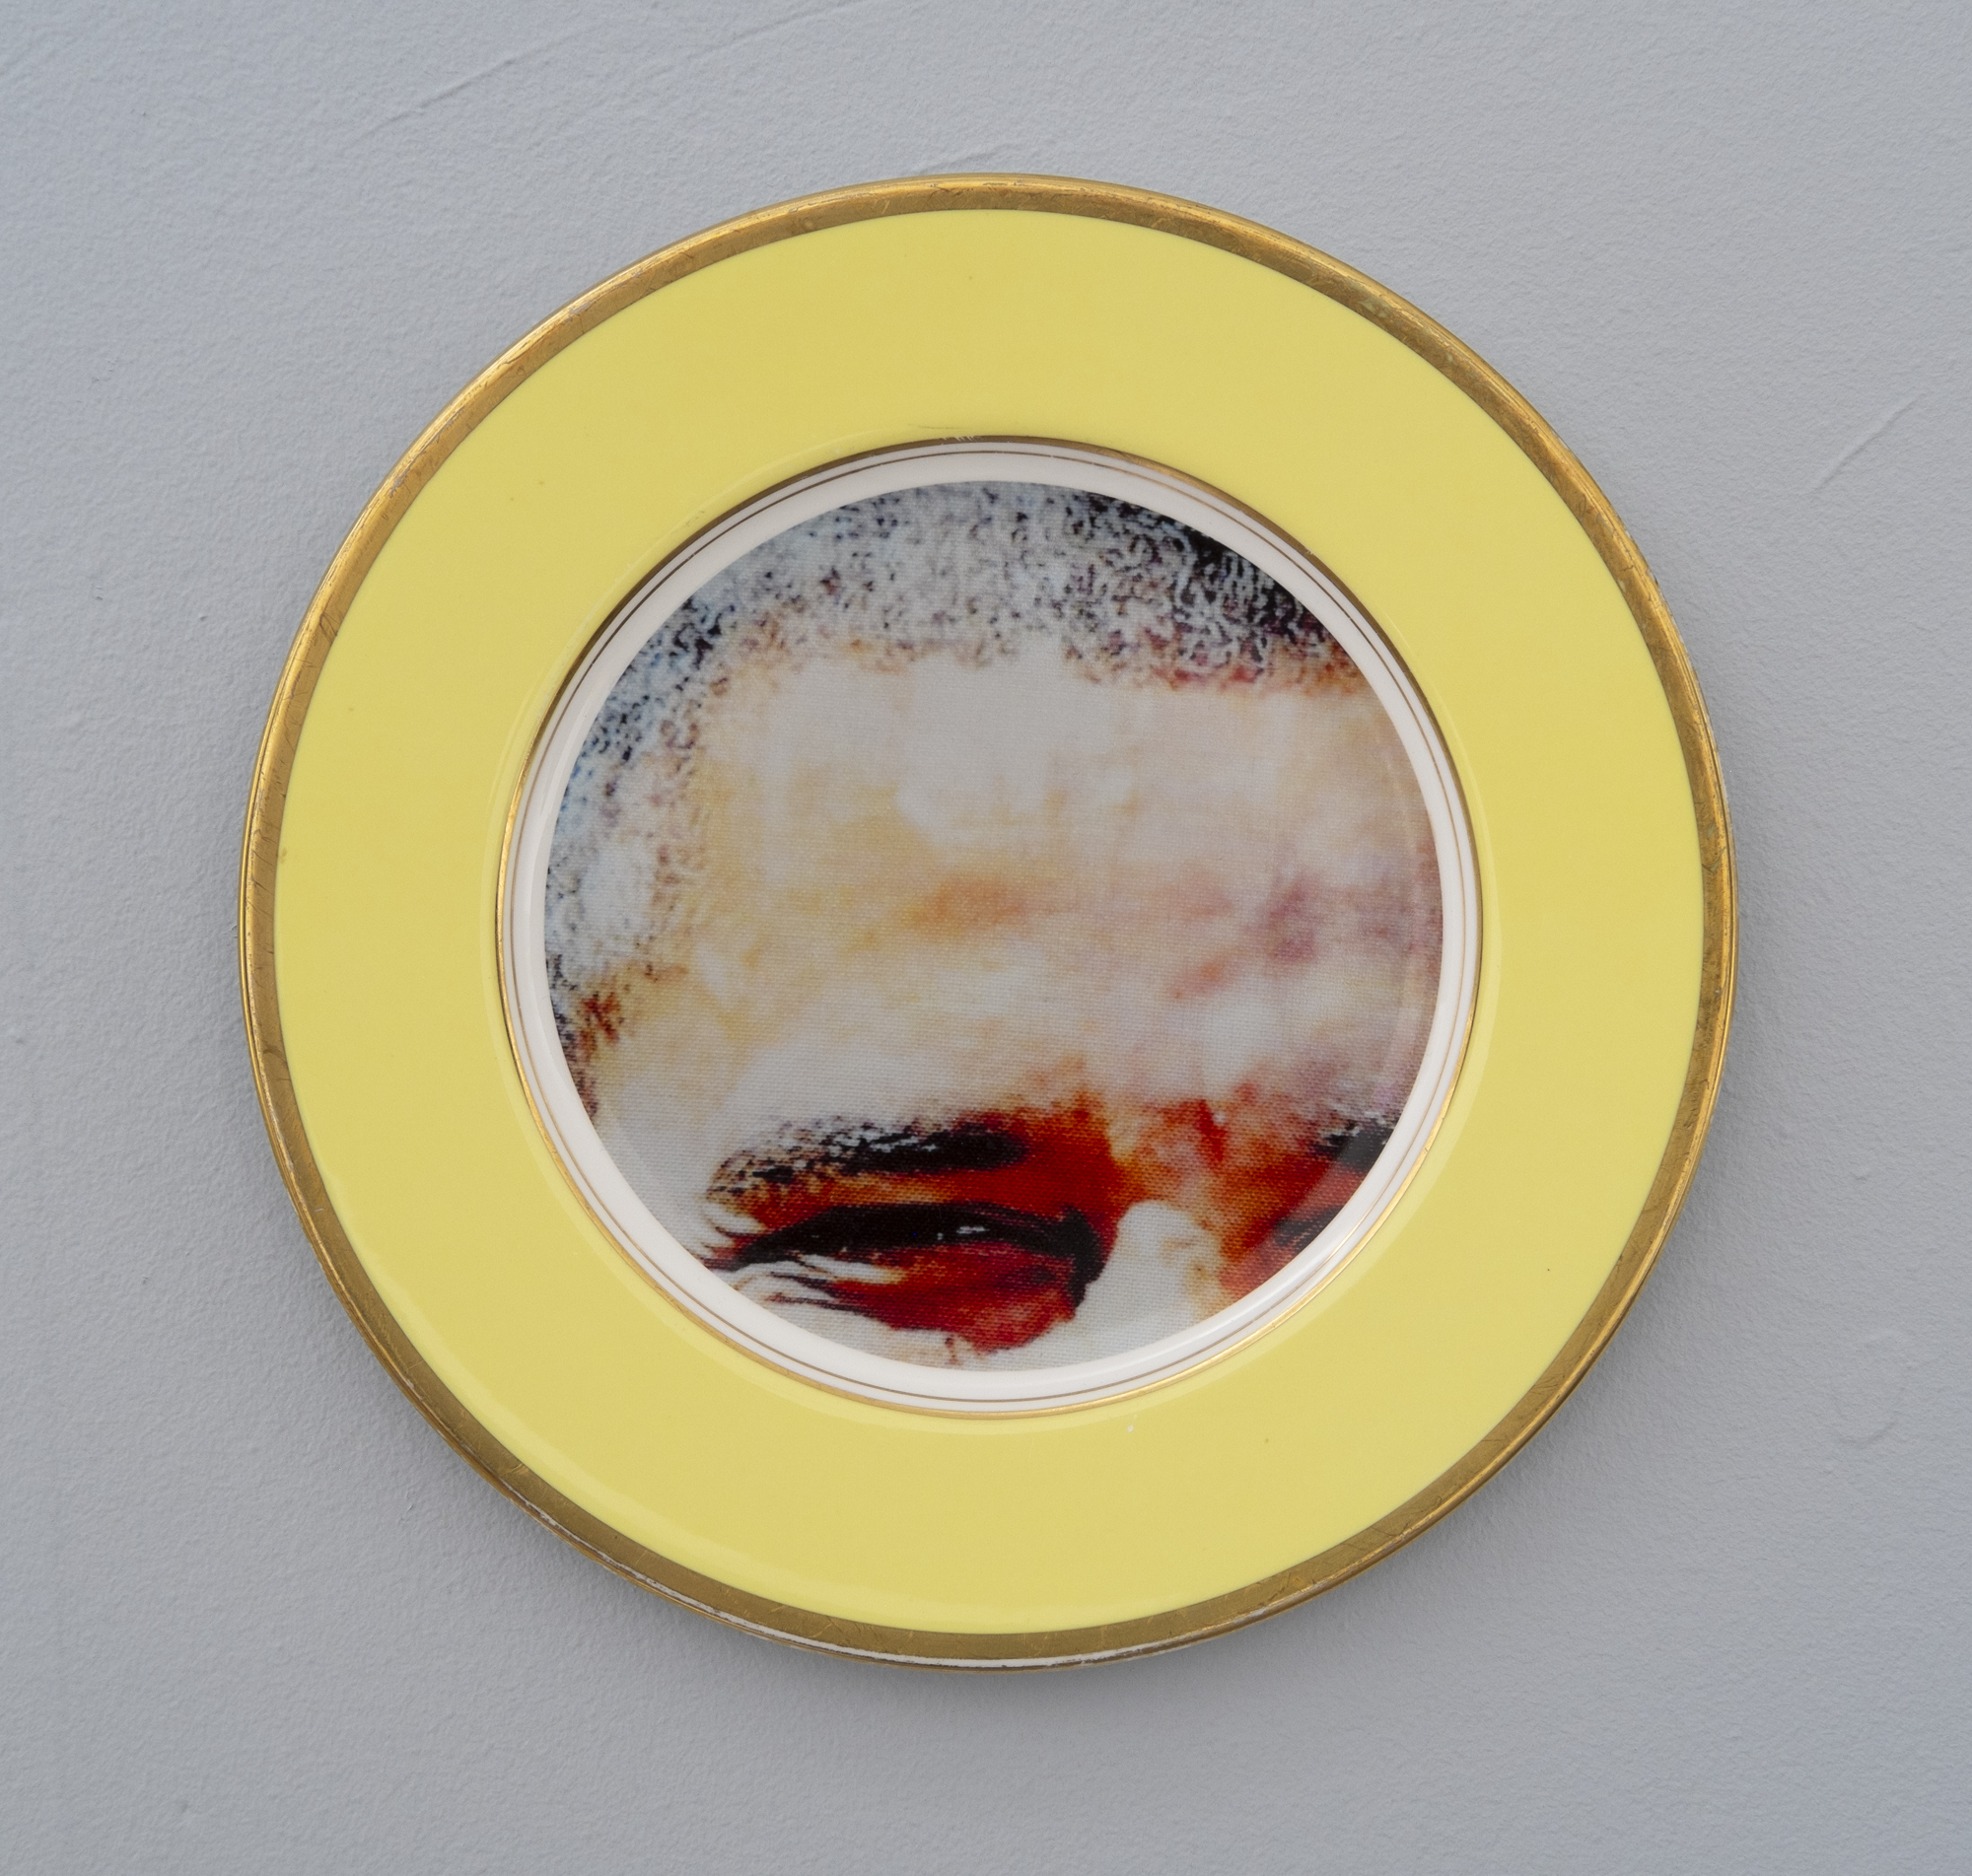  Bean Gilsdorf,  Barack Obama,  2018, Ceramic plate, 10.5 inch diameter 